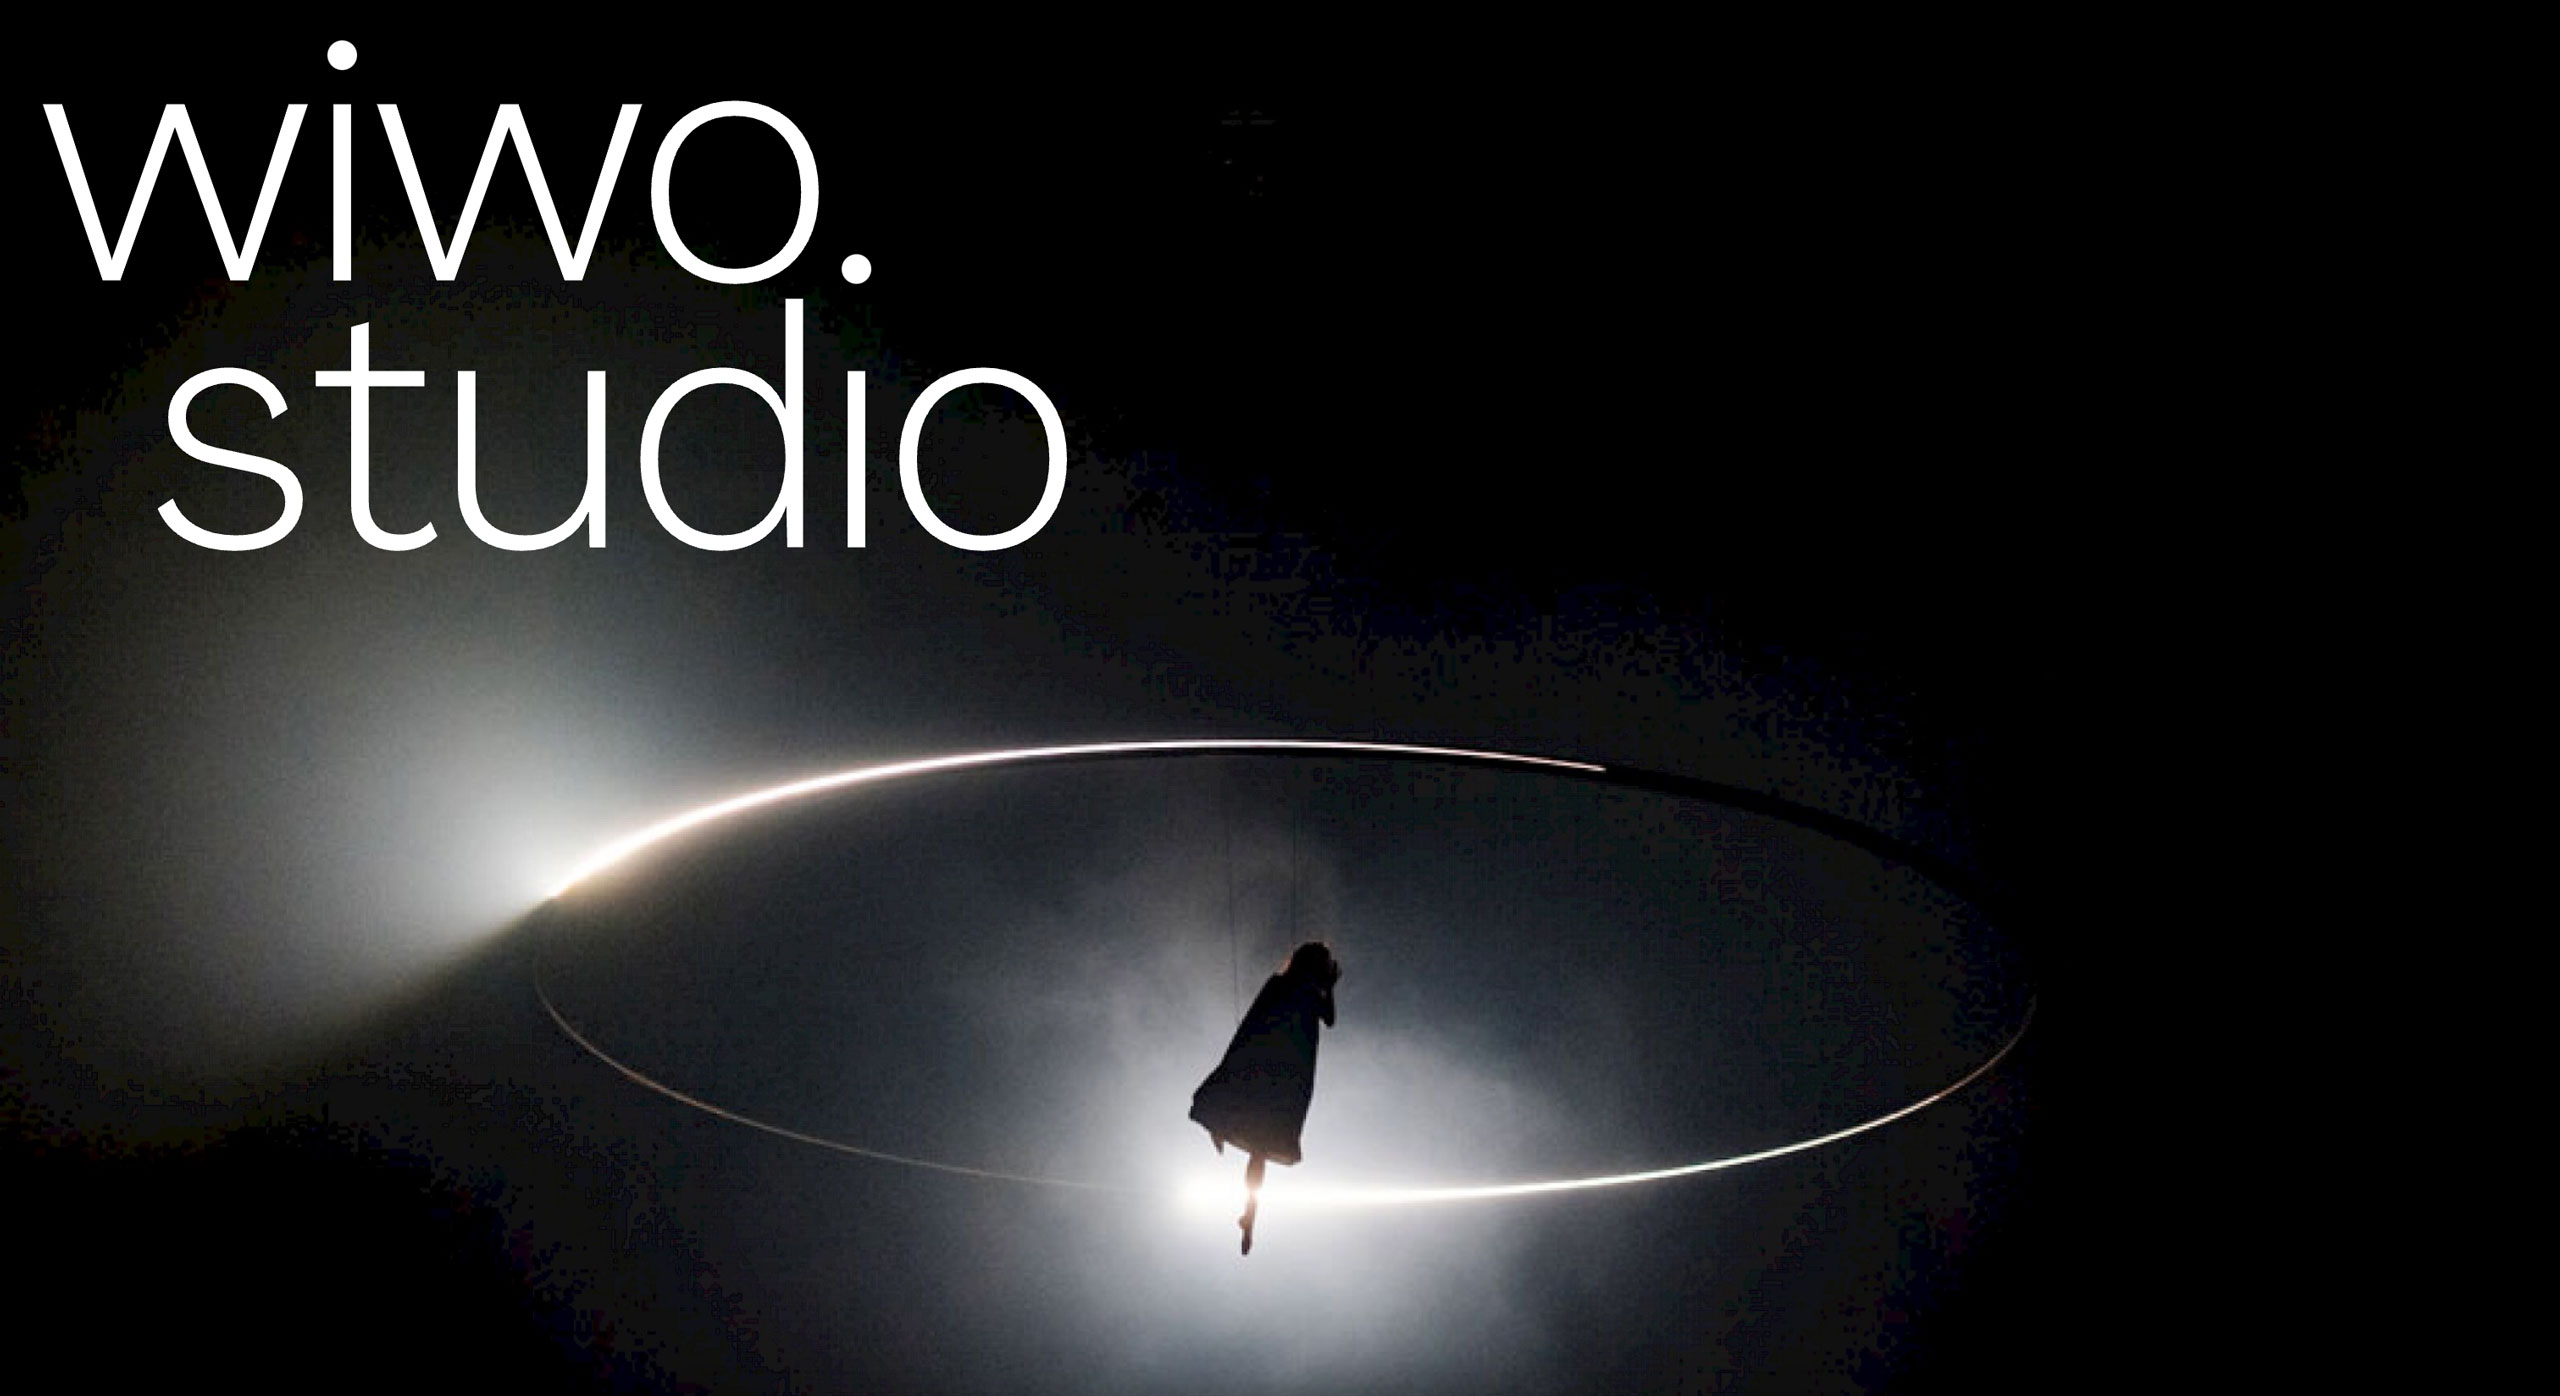 wiwo.studio, wiwo.studio is a collective network of creatives within audiovisual art